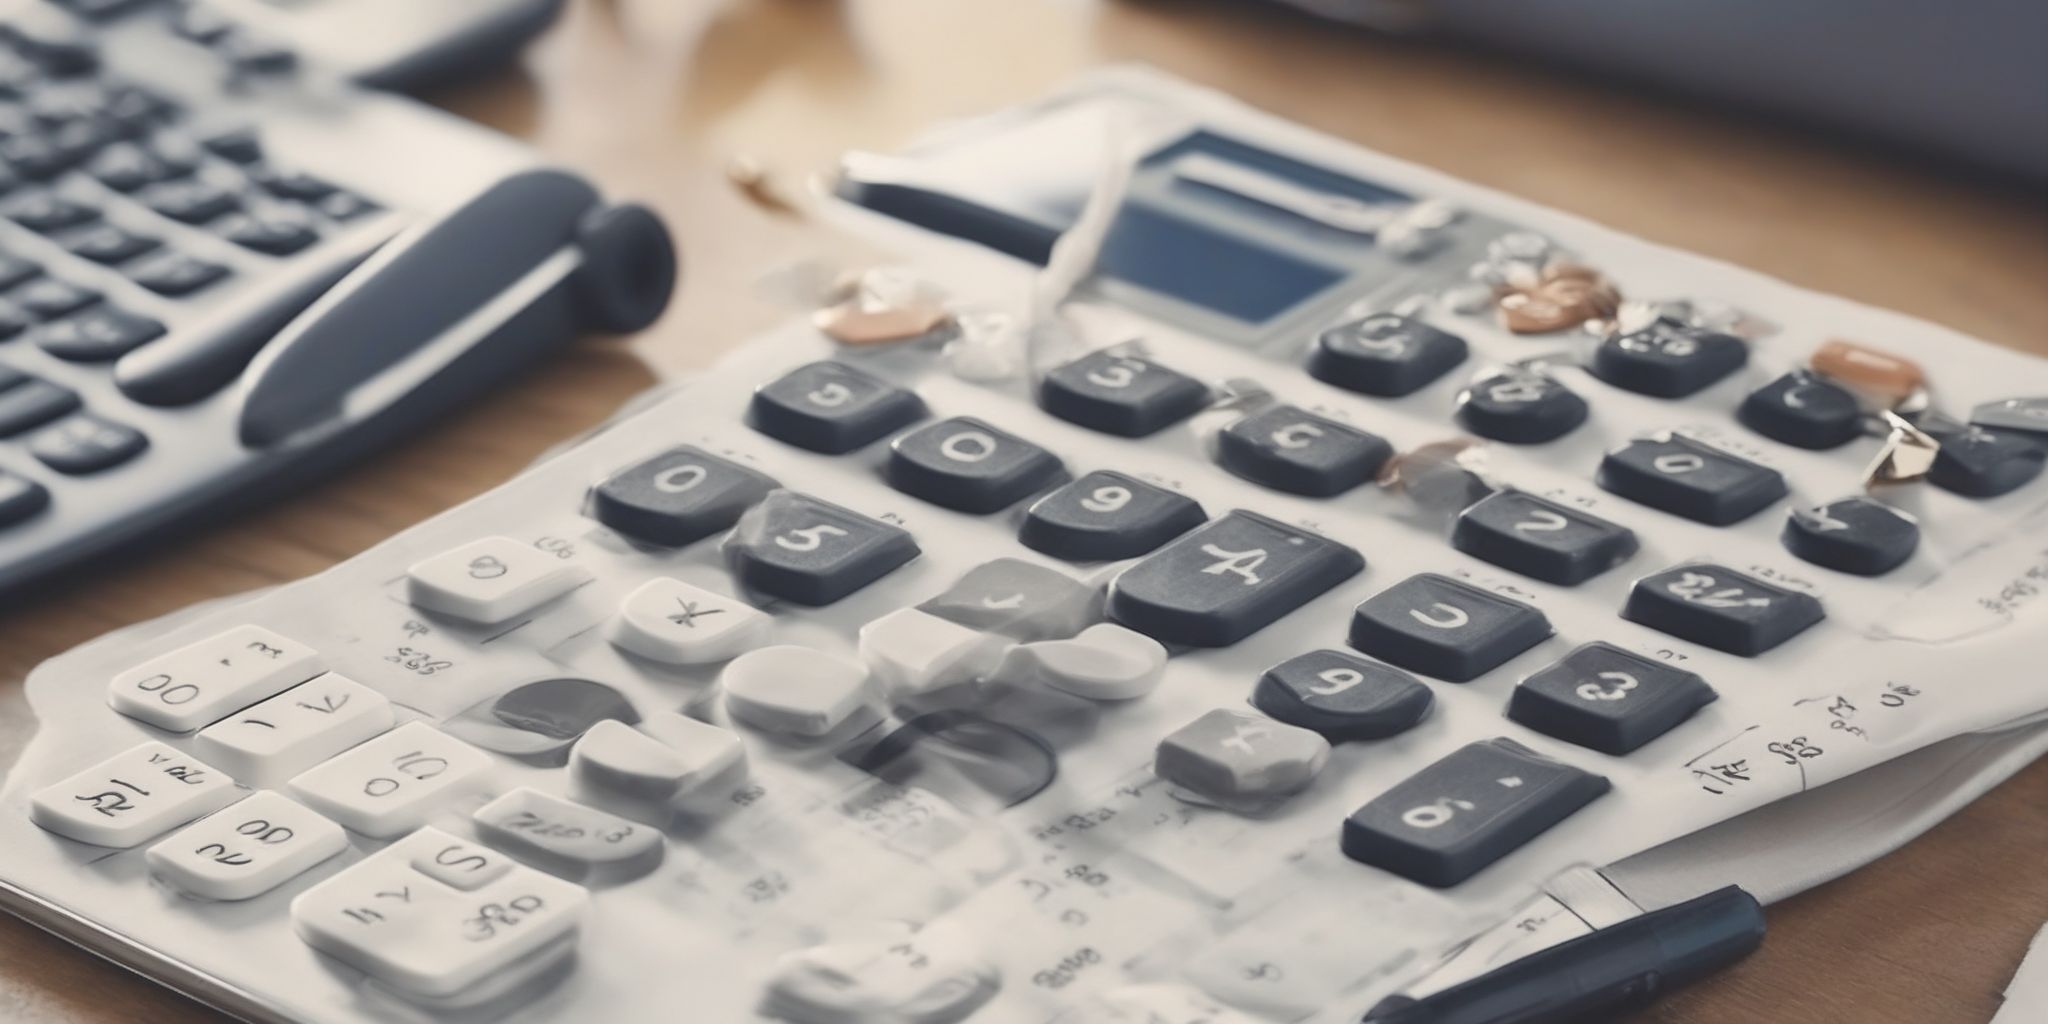 Financial calculators mortgage: Calculator app  in realistic, photographic style